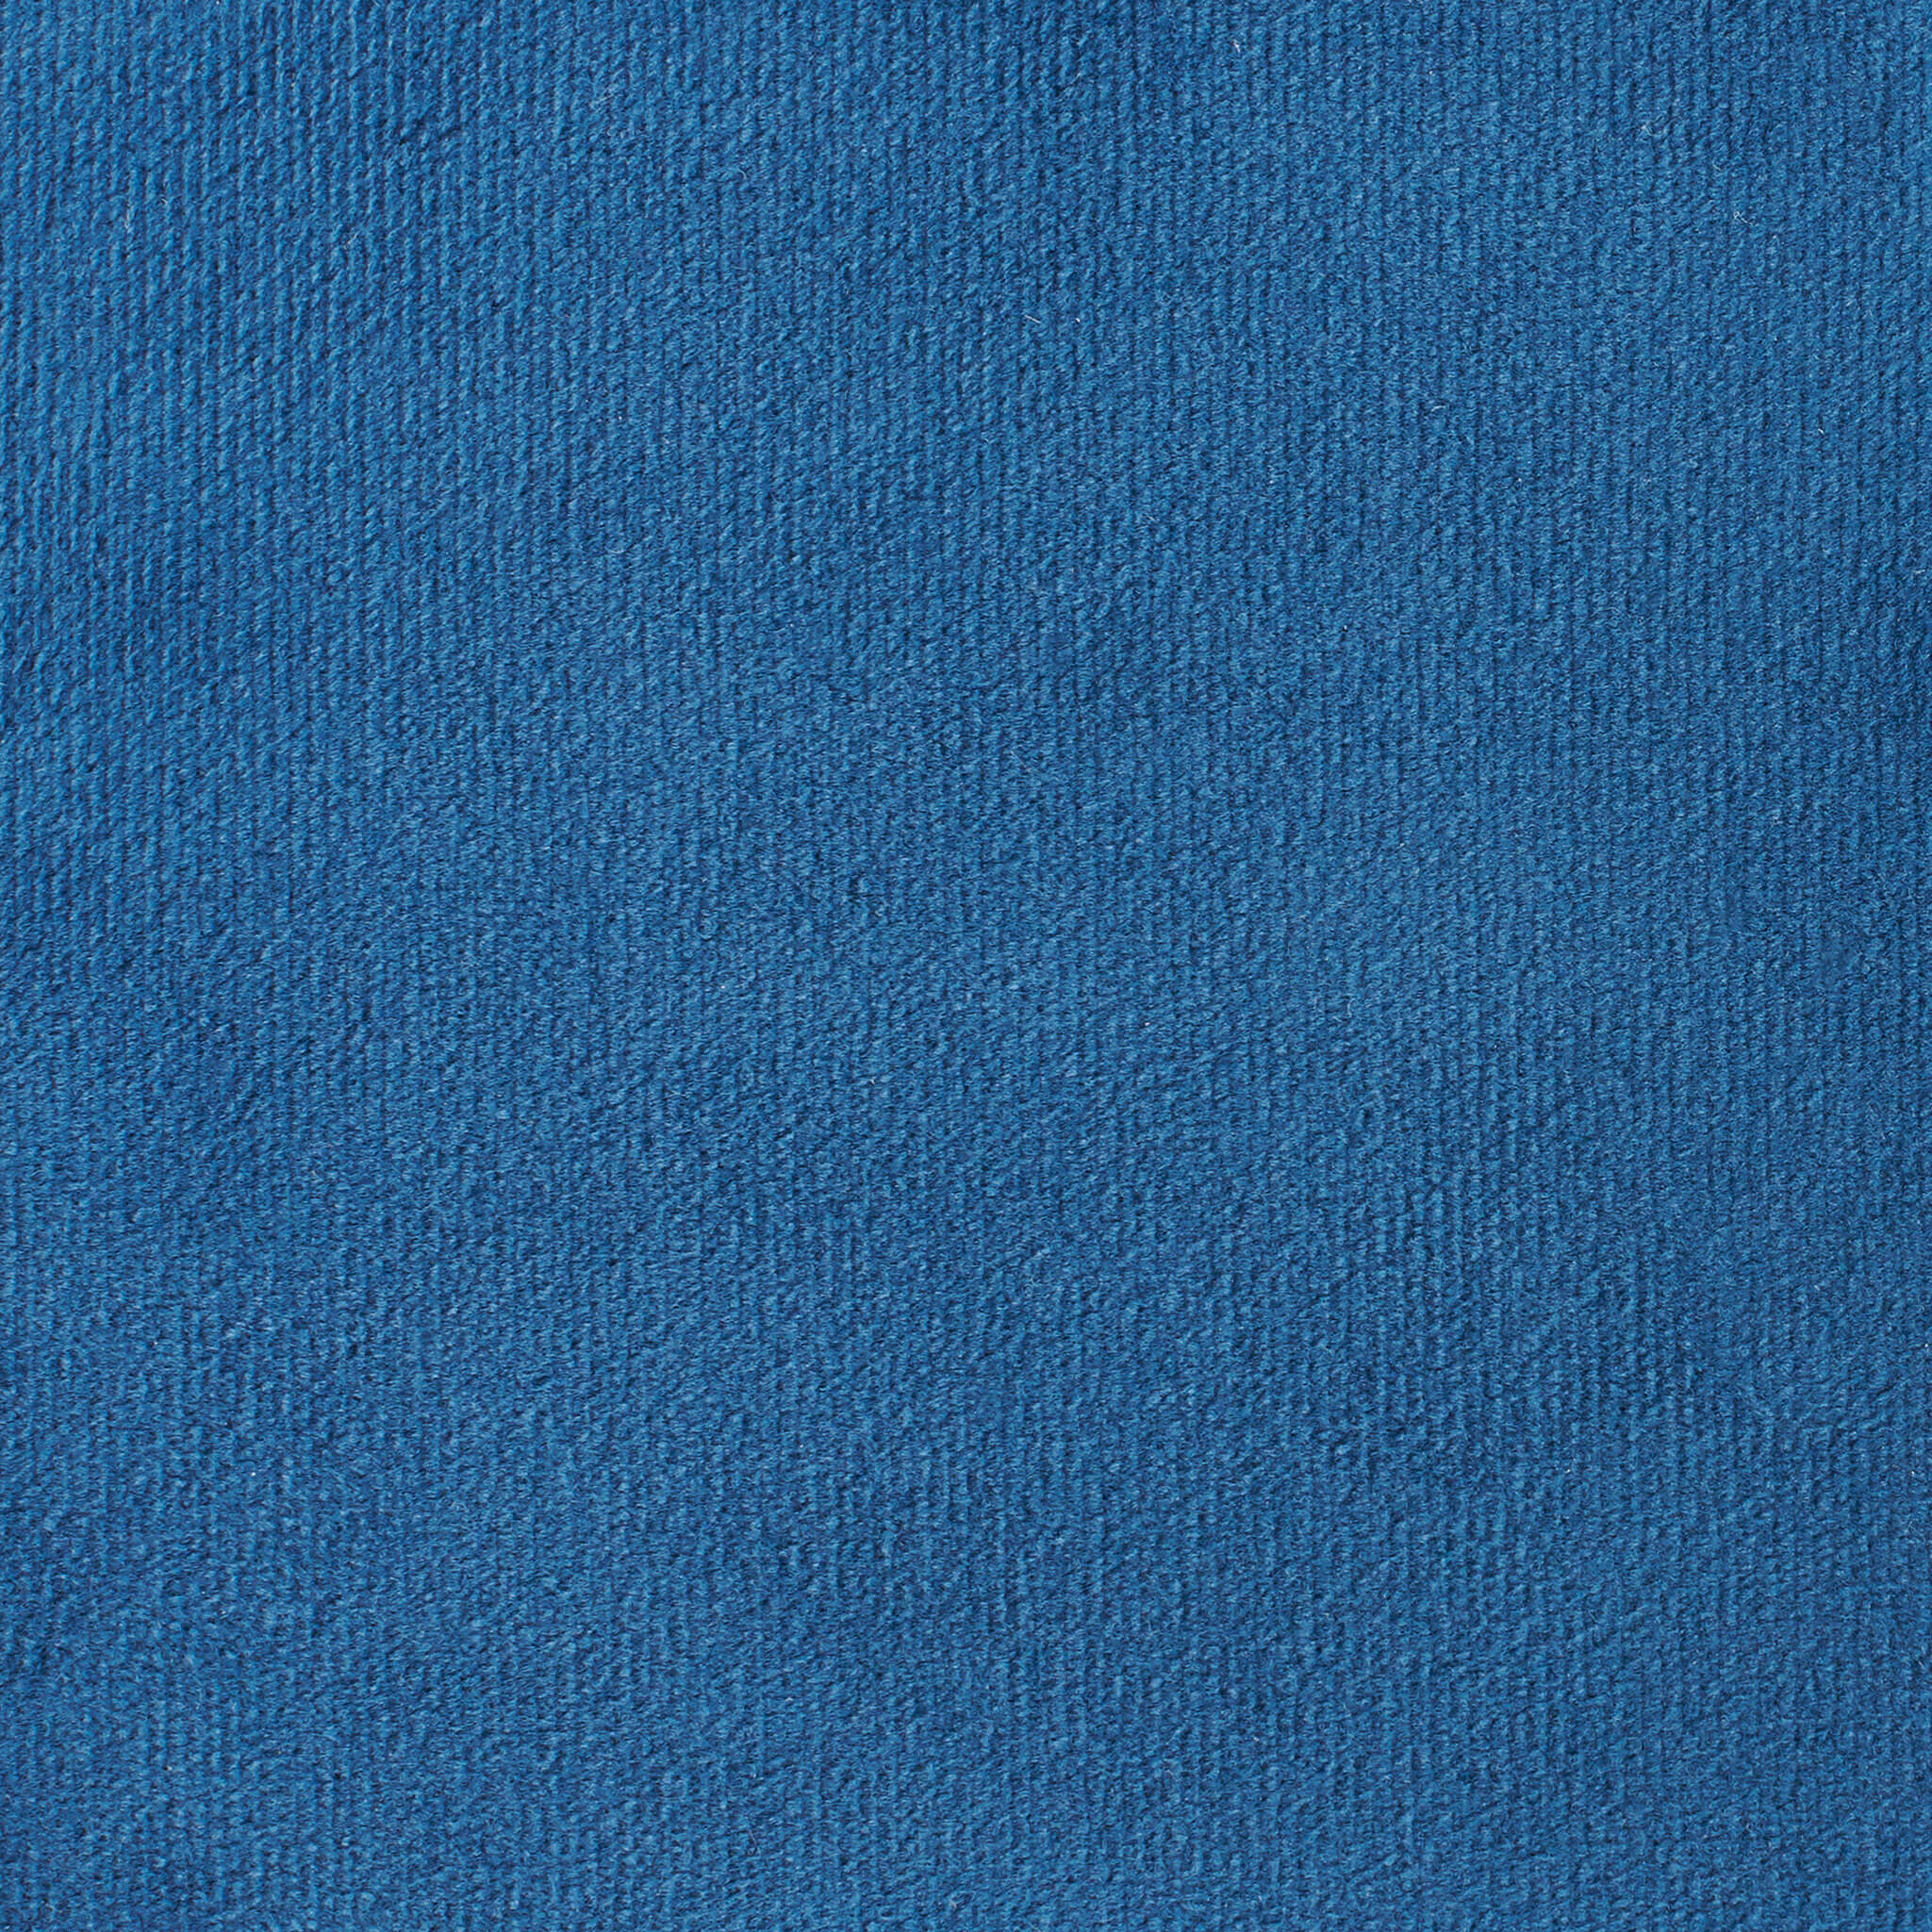 Sample Swatch for Premium Denim Medium Washed Blue Fabric at Futonland